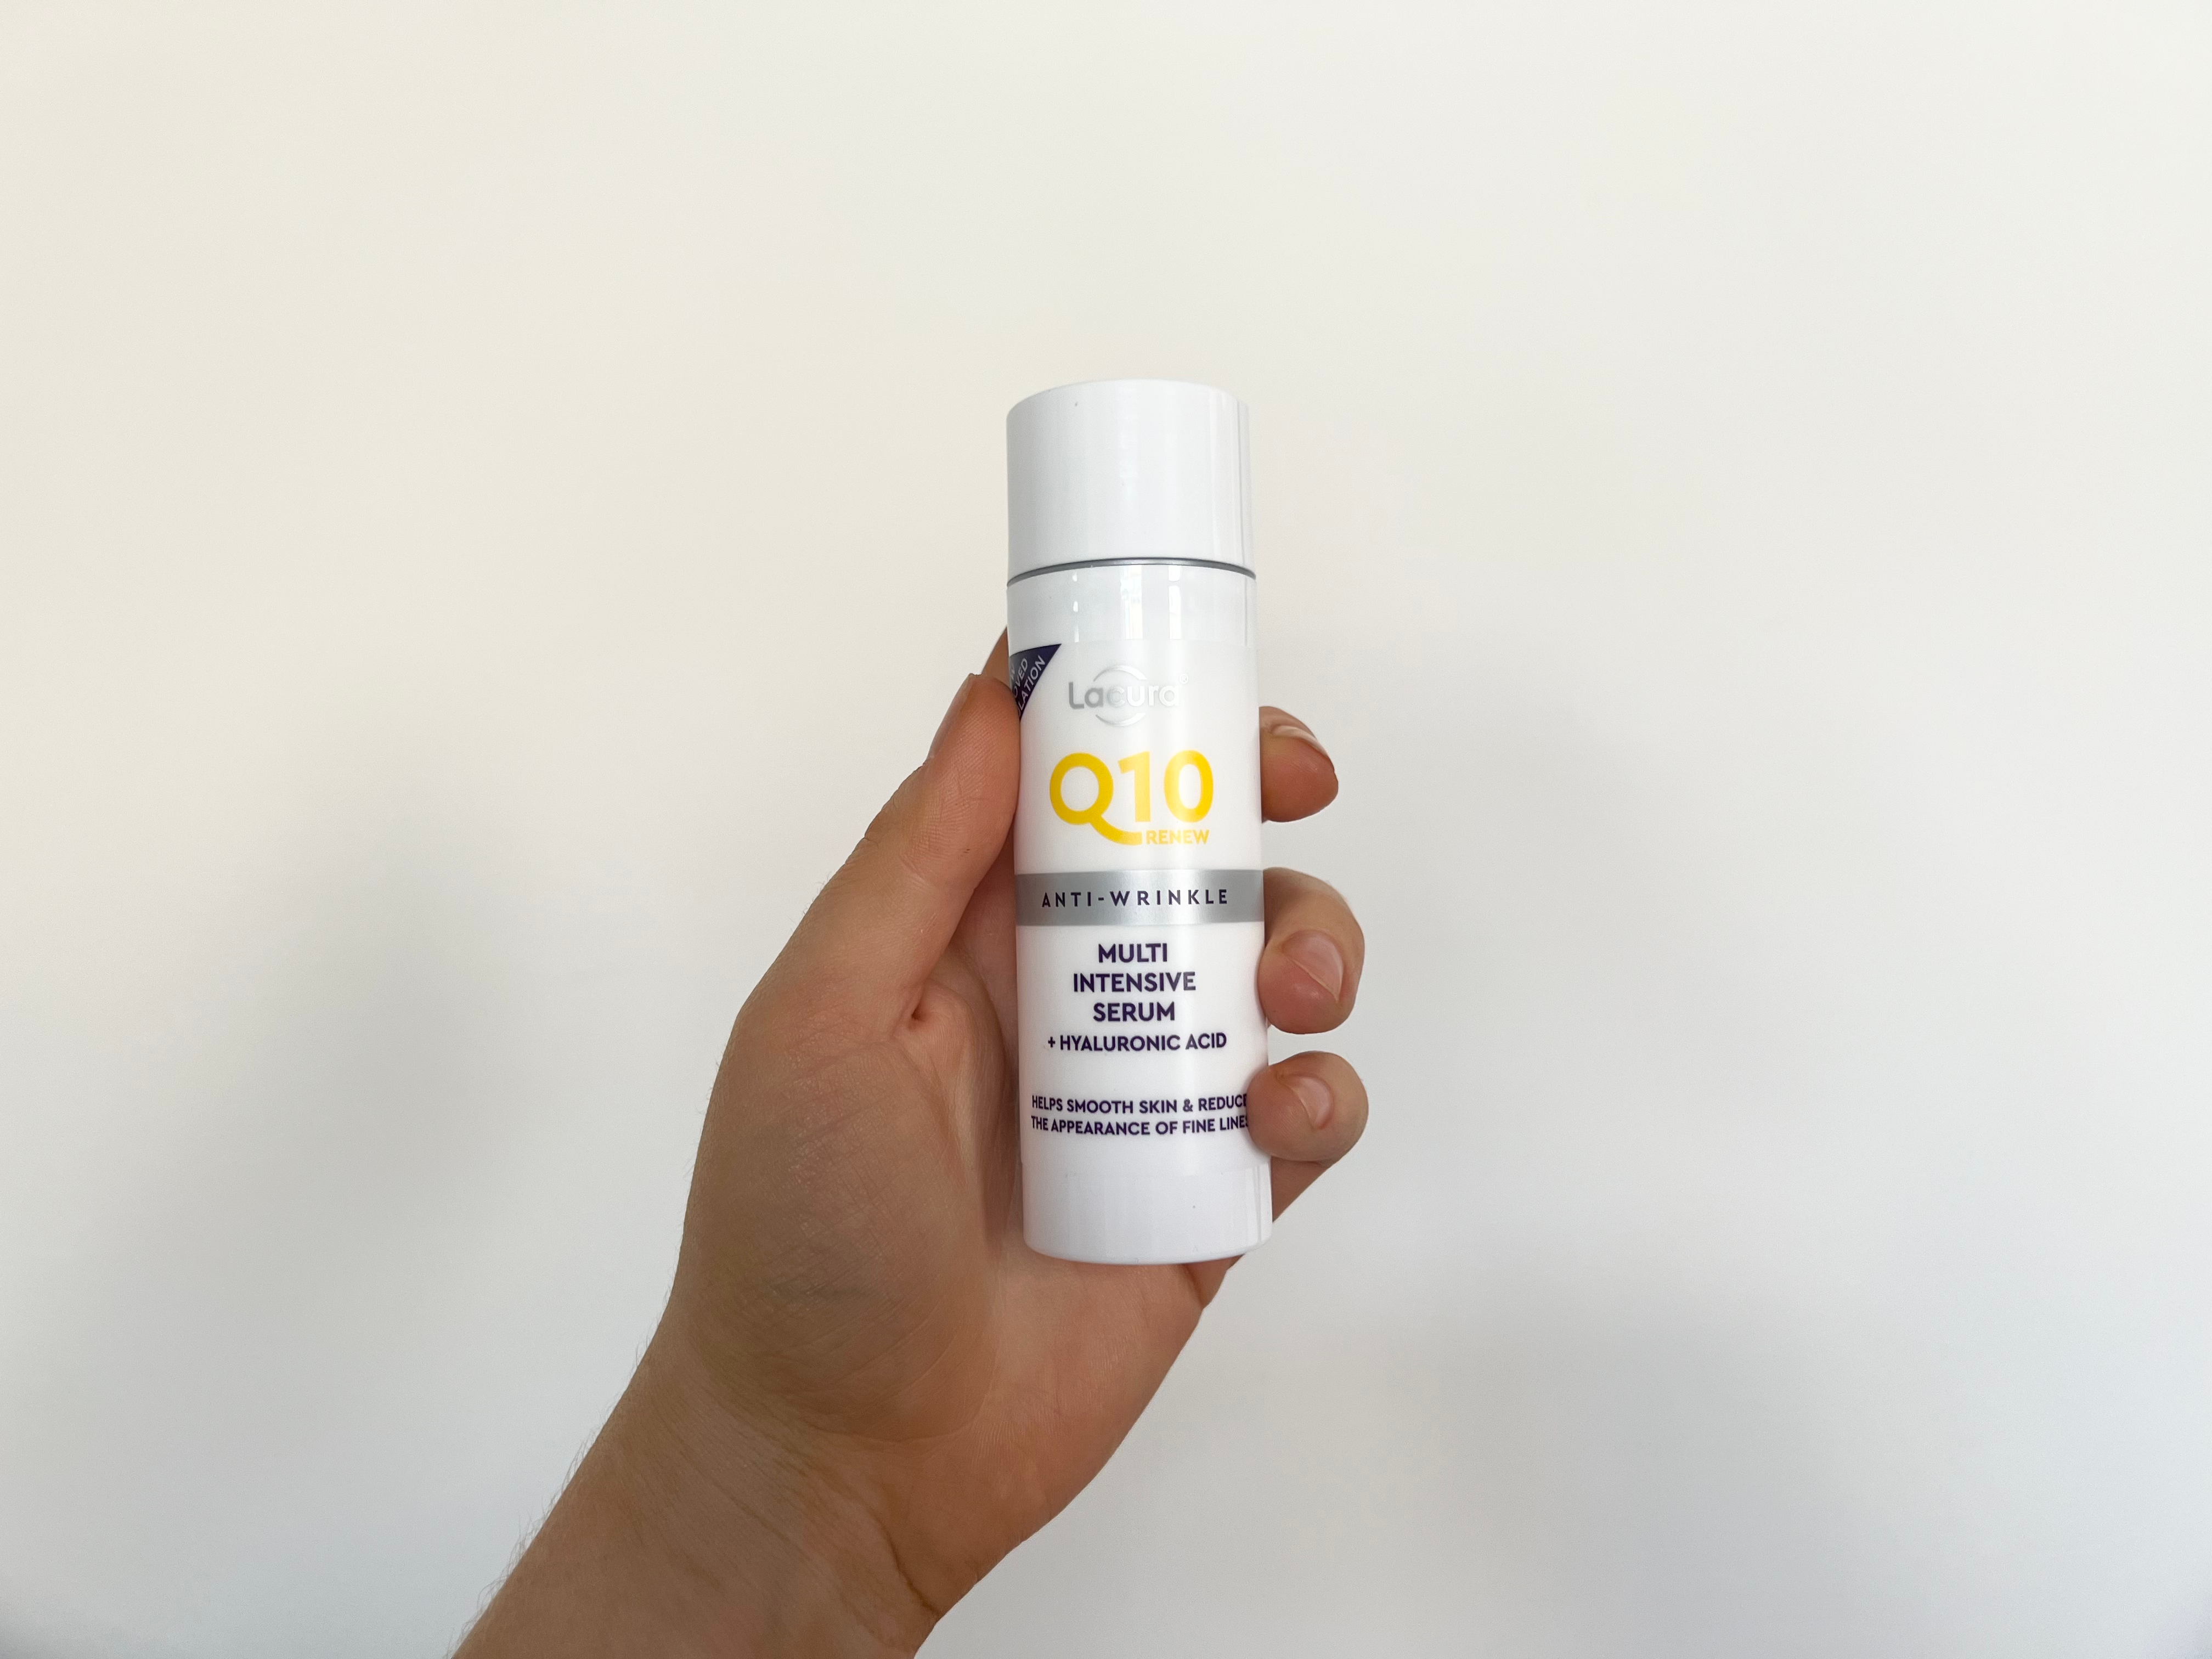 Lacura Q10 renew anti-wrinkle multi intensive serum 50ml